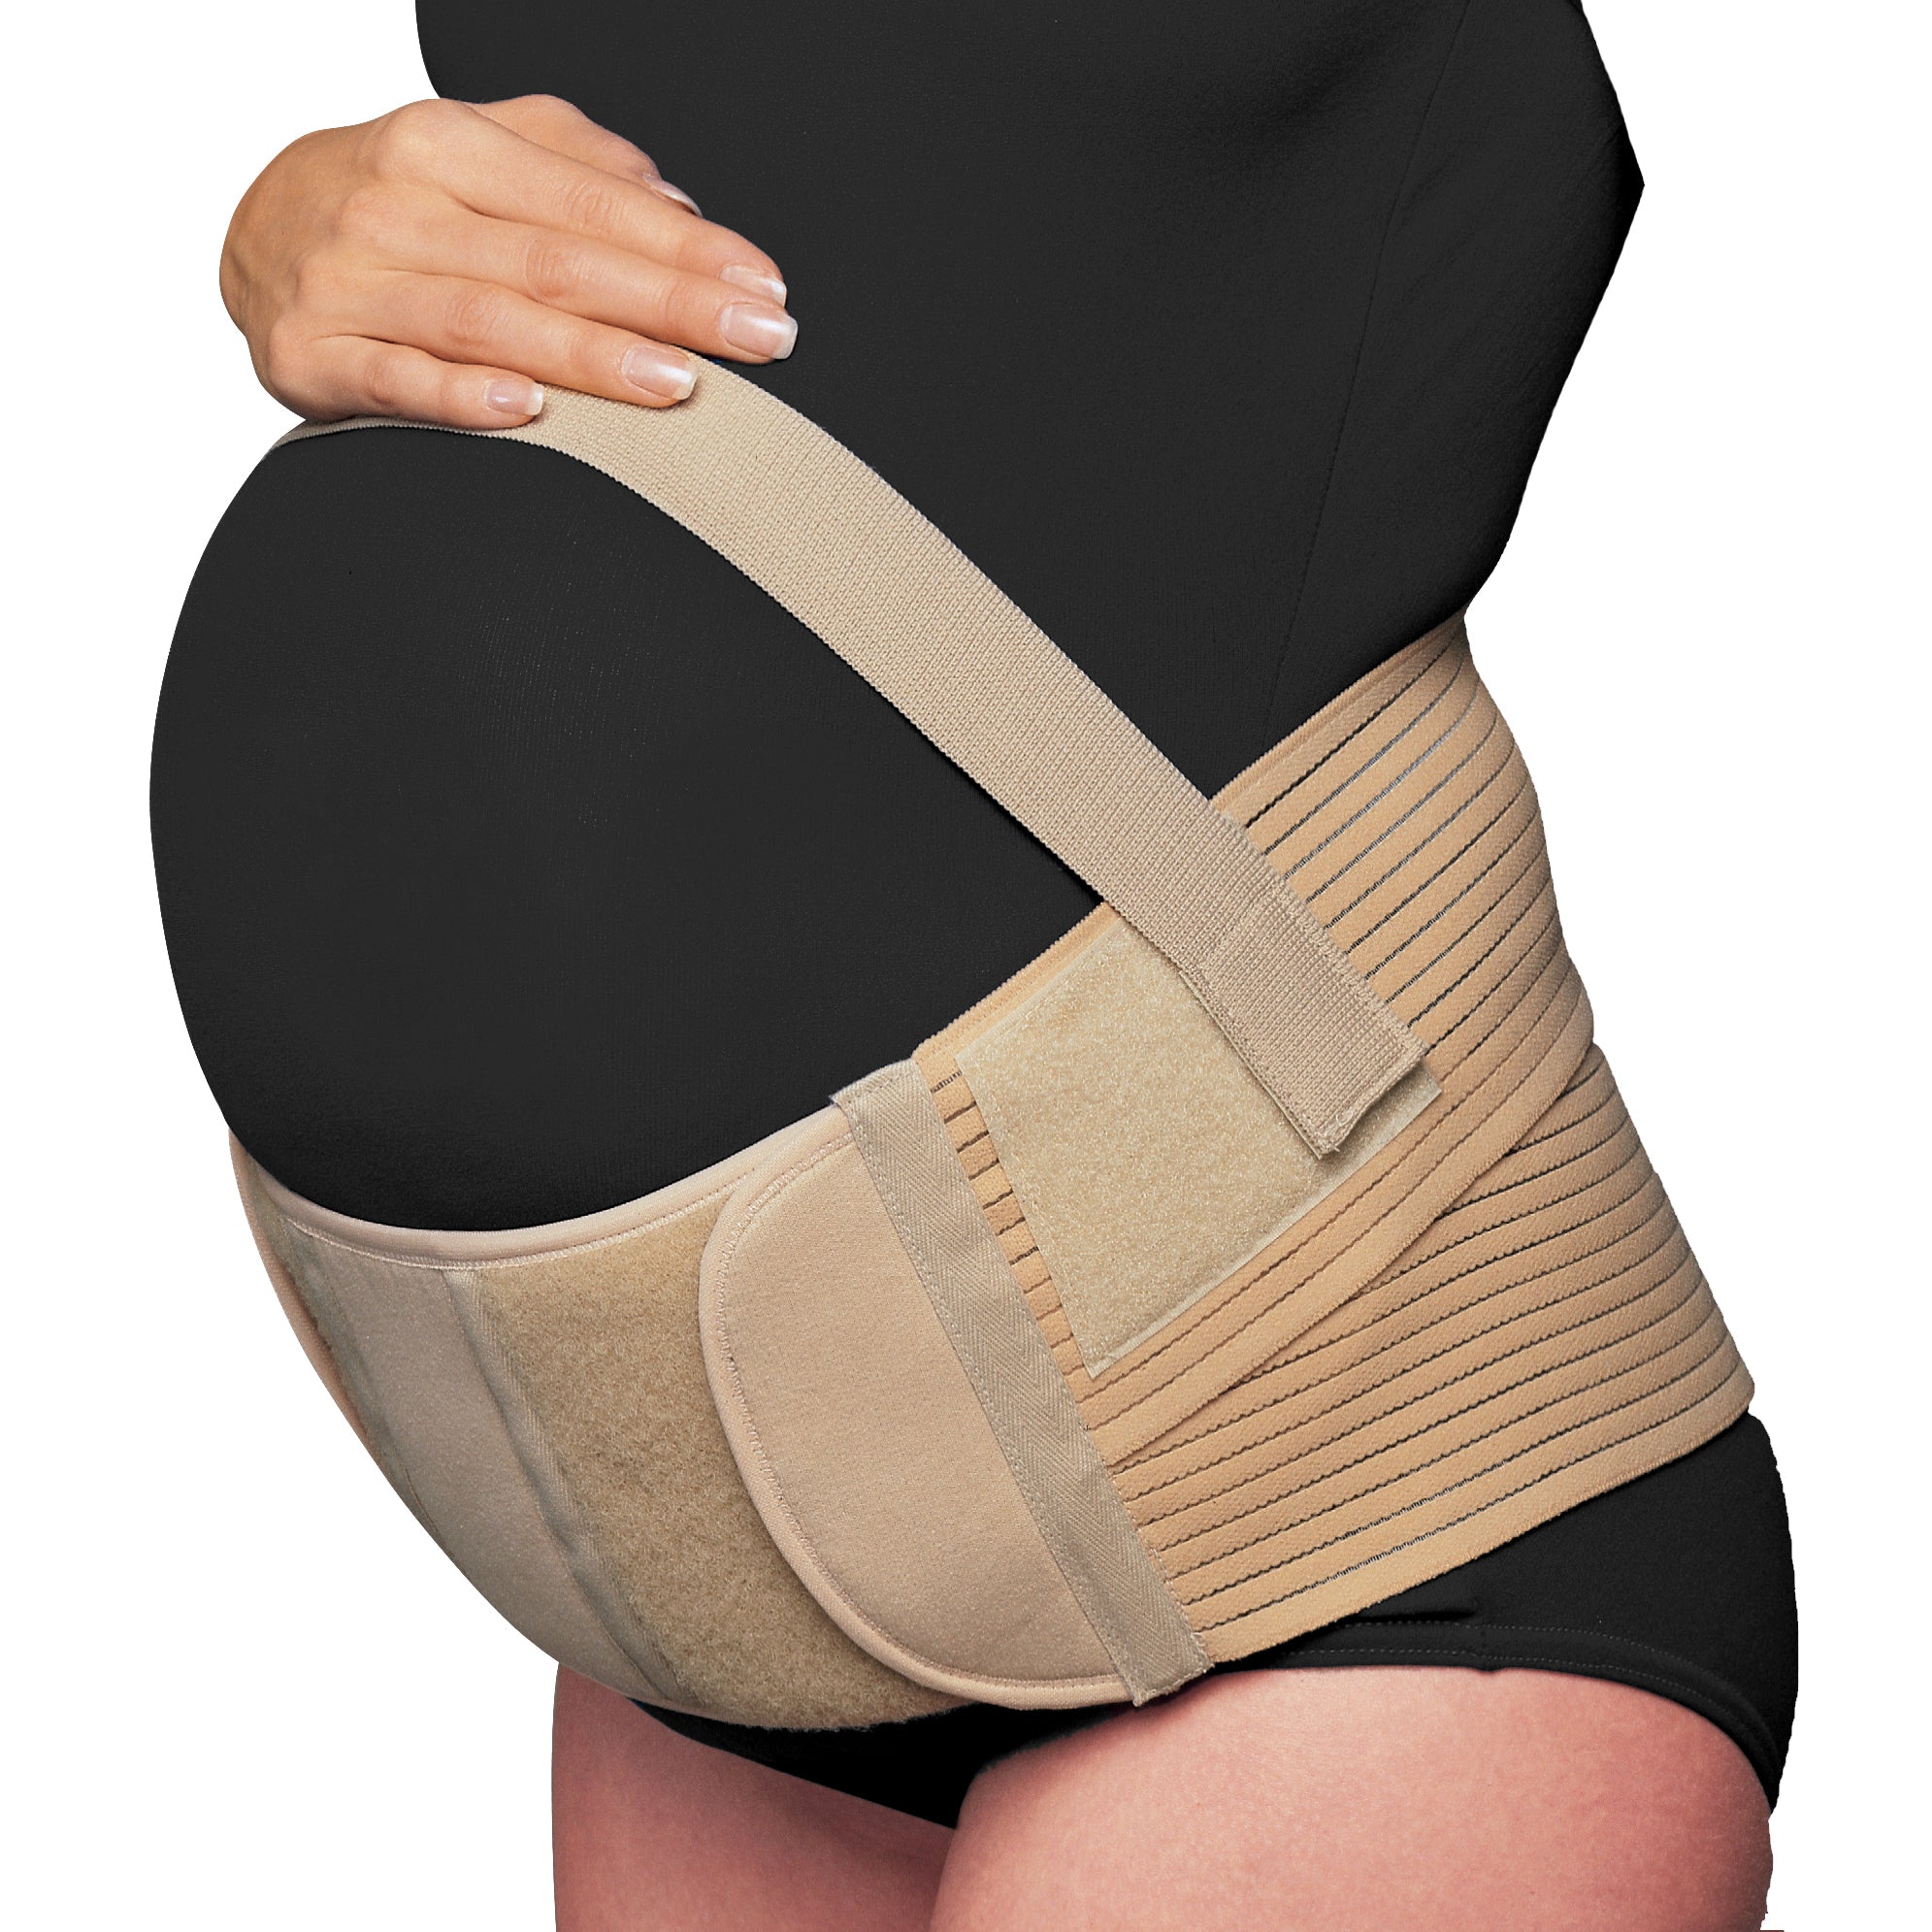 Medimount Healthcare post pregnancy belt after delivery for tummy